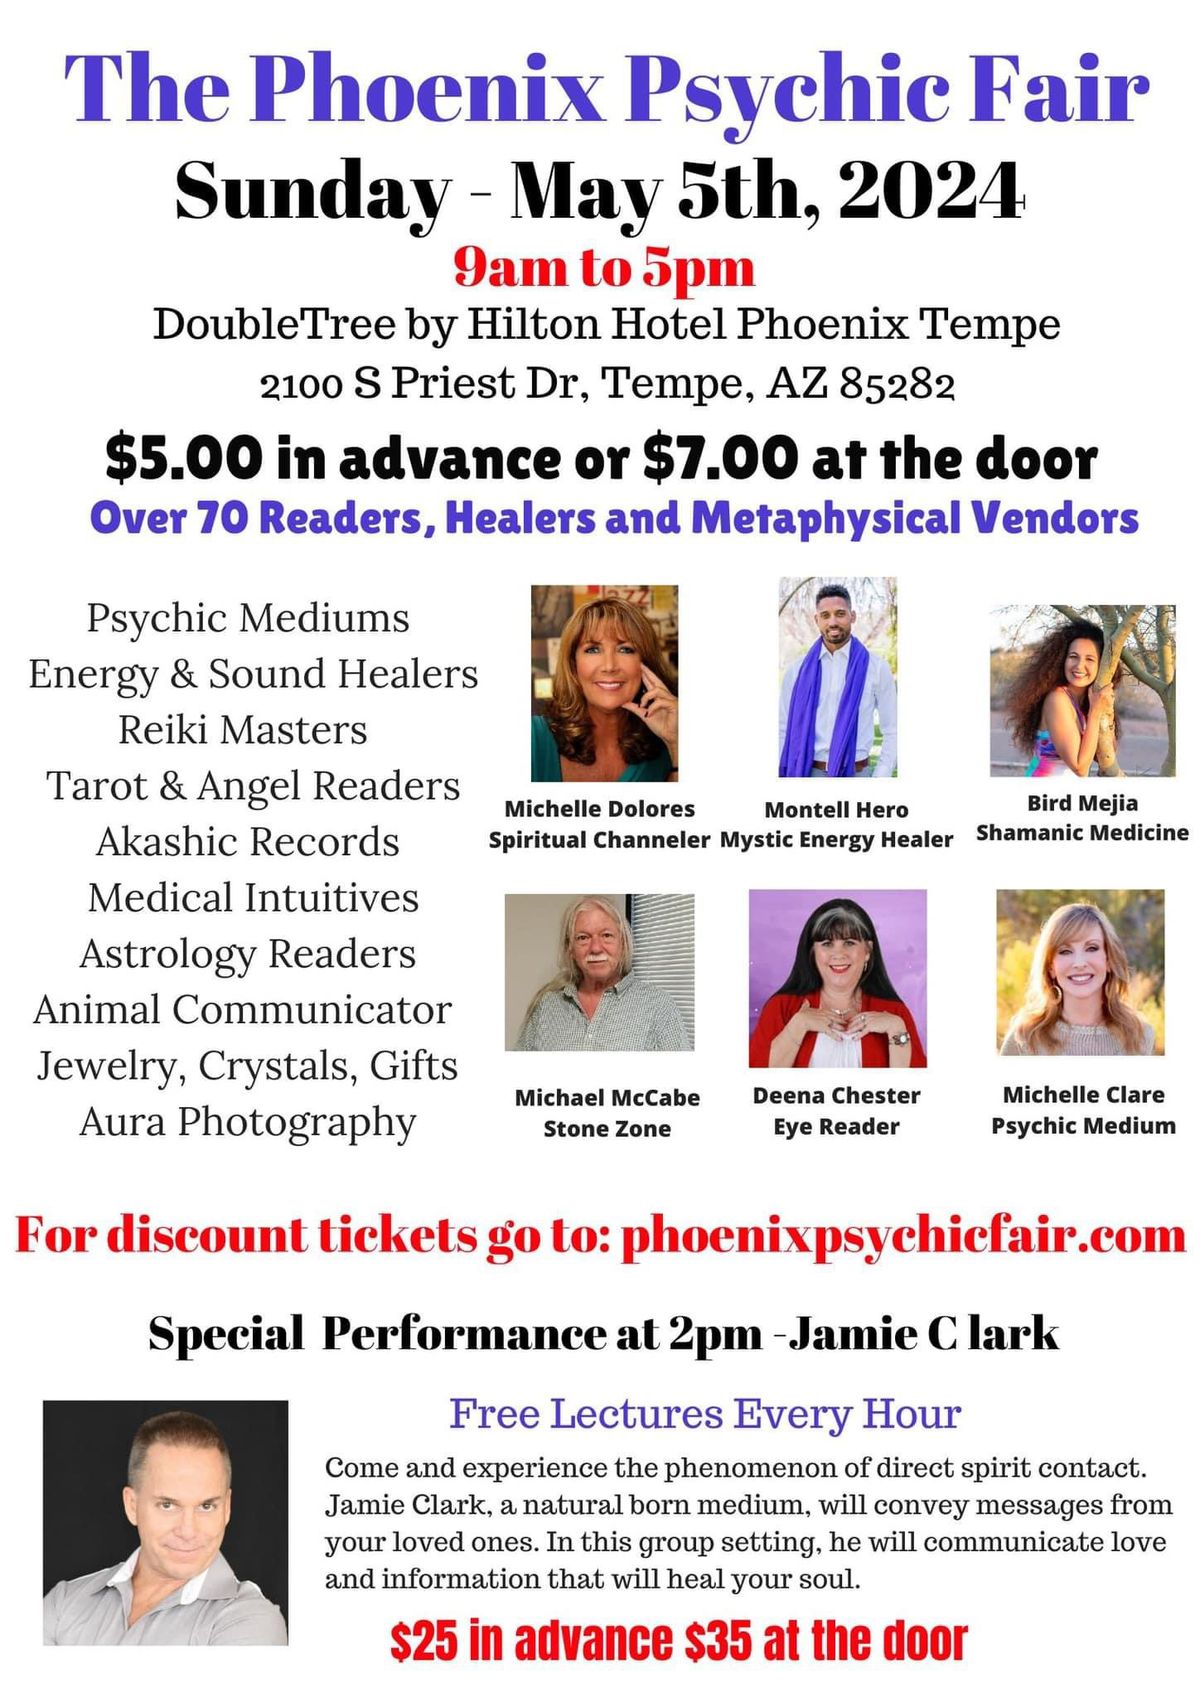 The Phoenix Psychic Fair 